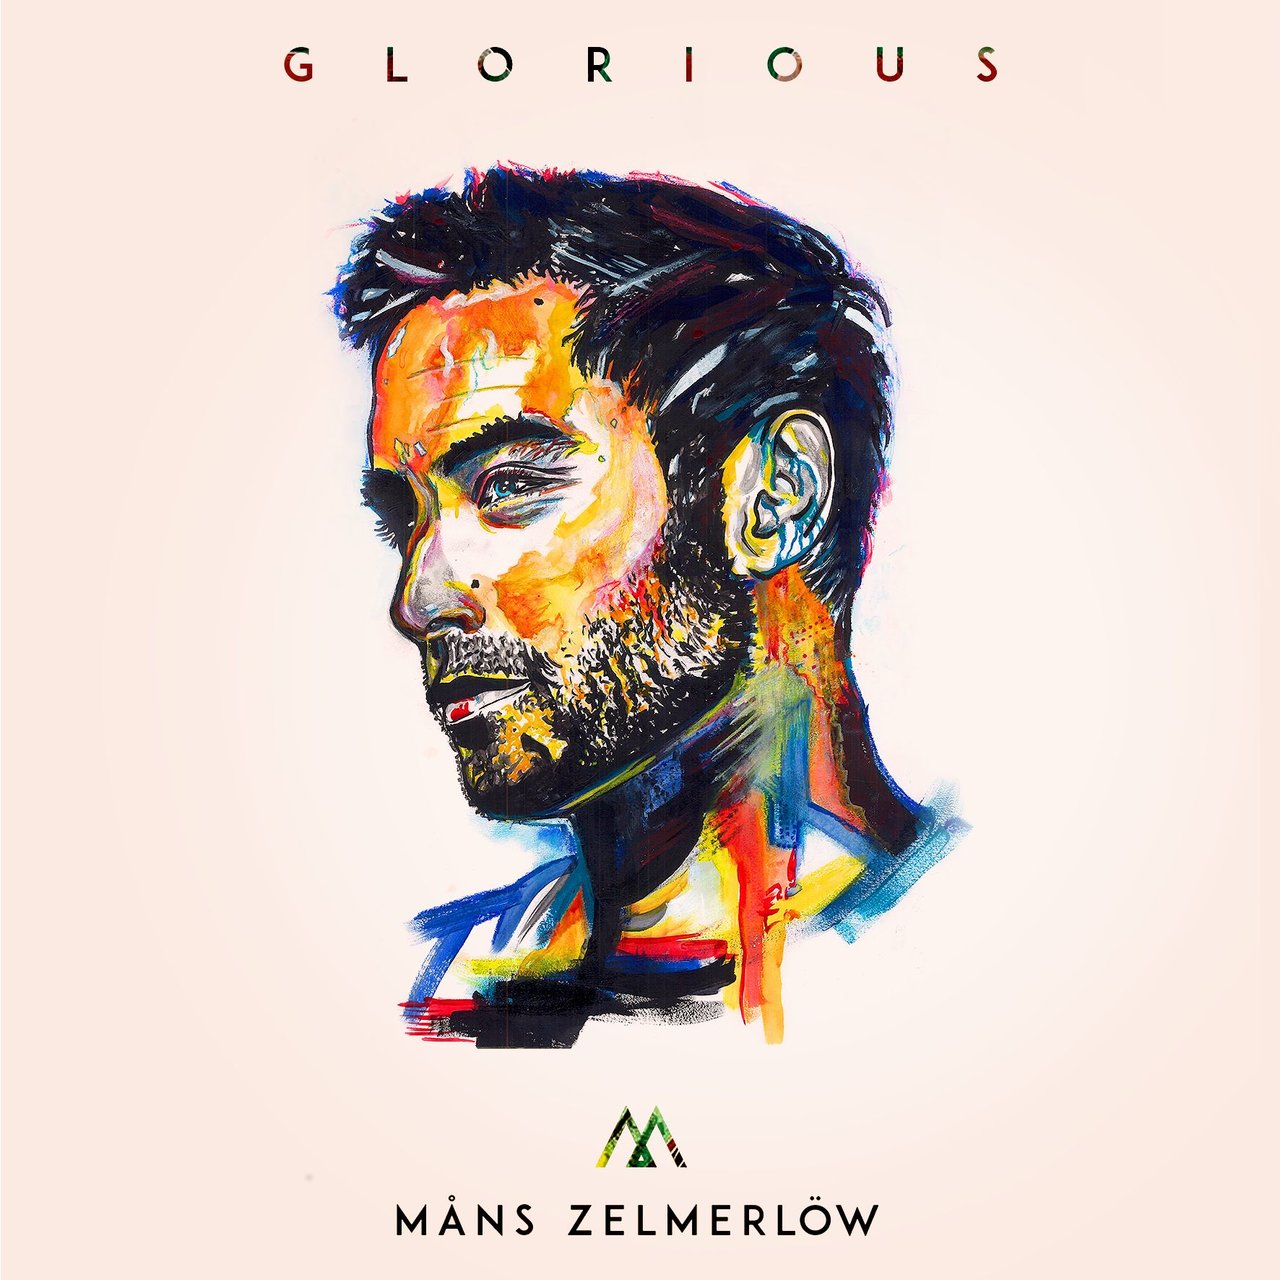 Måns Zelmerlöw Glorious cover artwork